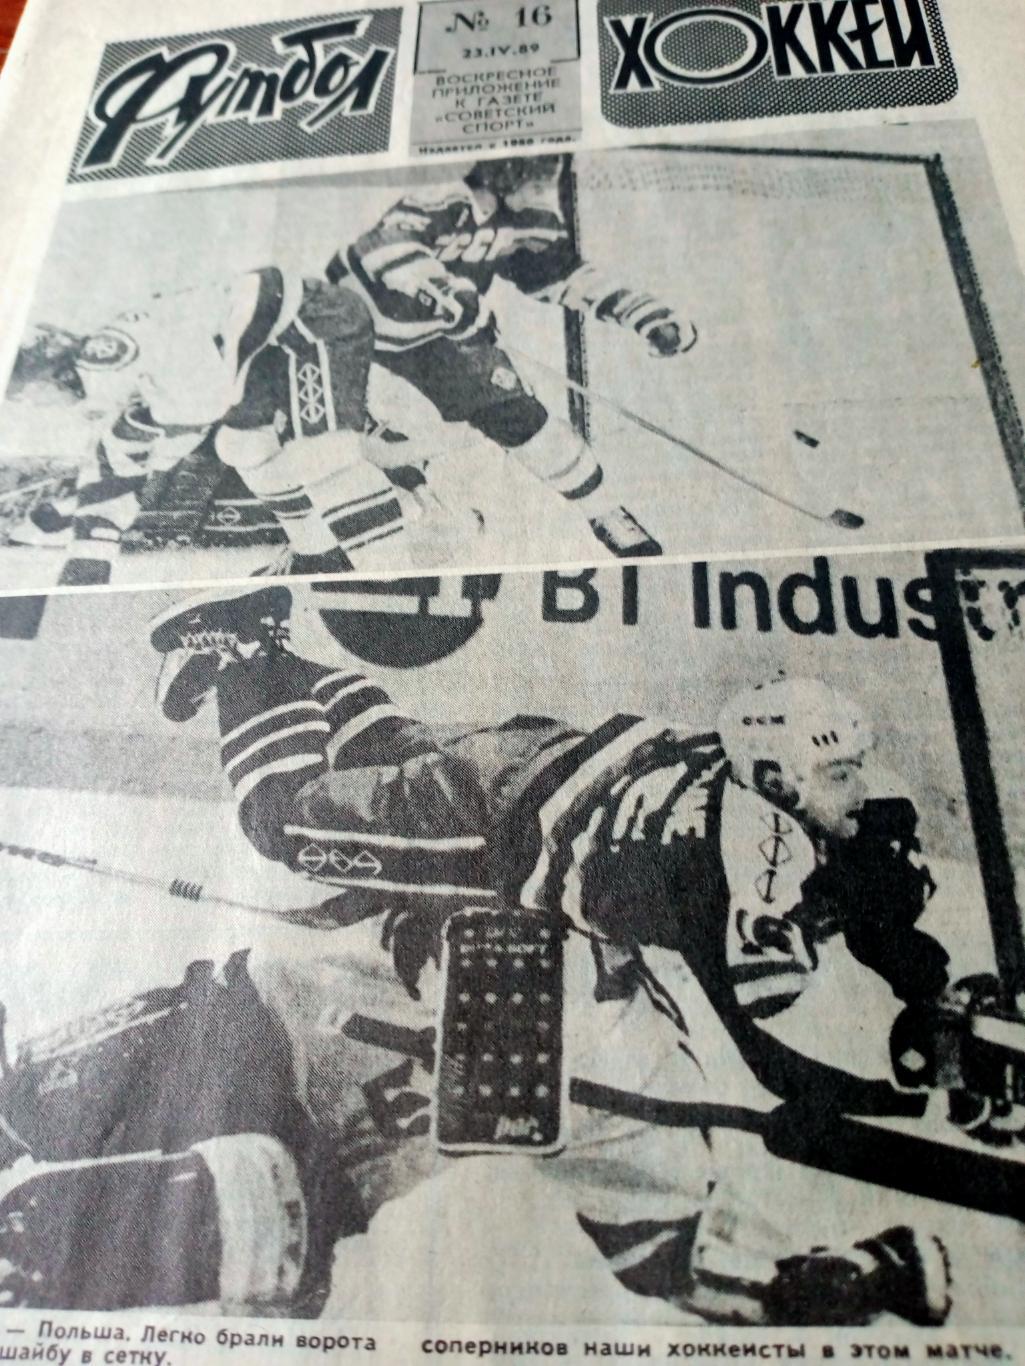 Футбол-Хоккей. 1989 год, № 16